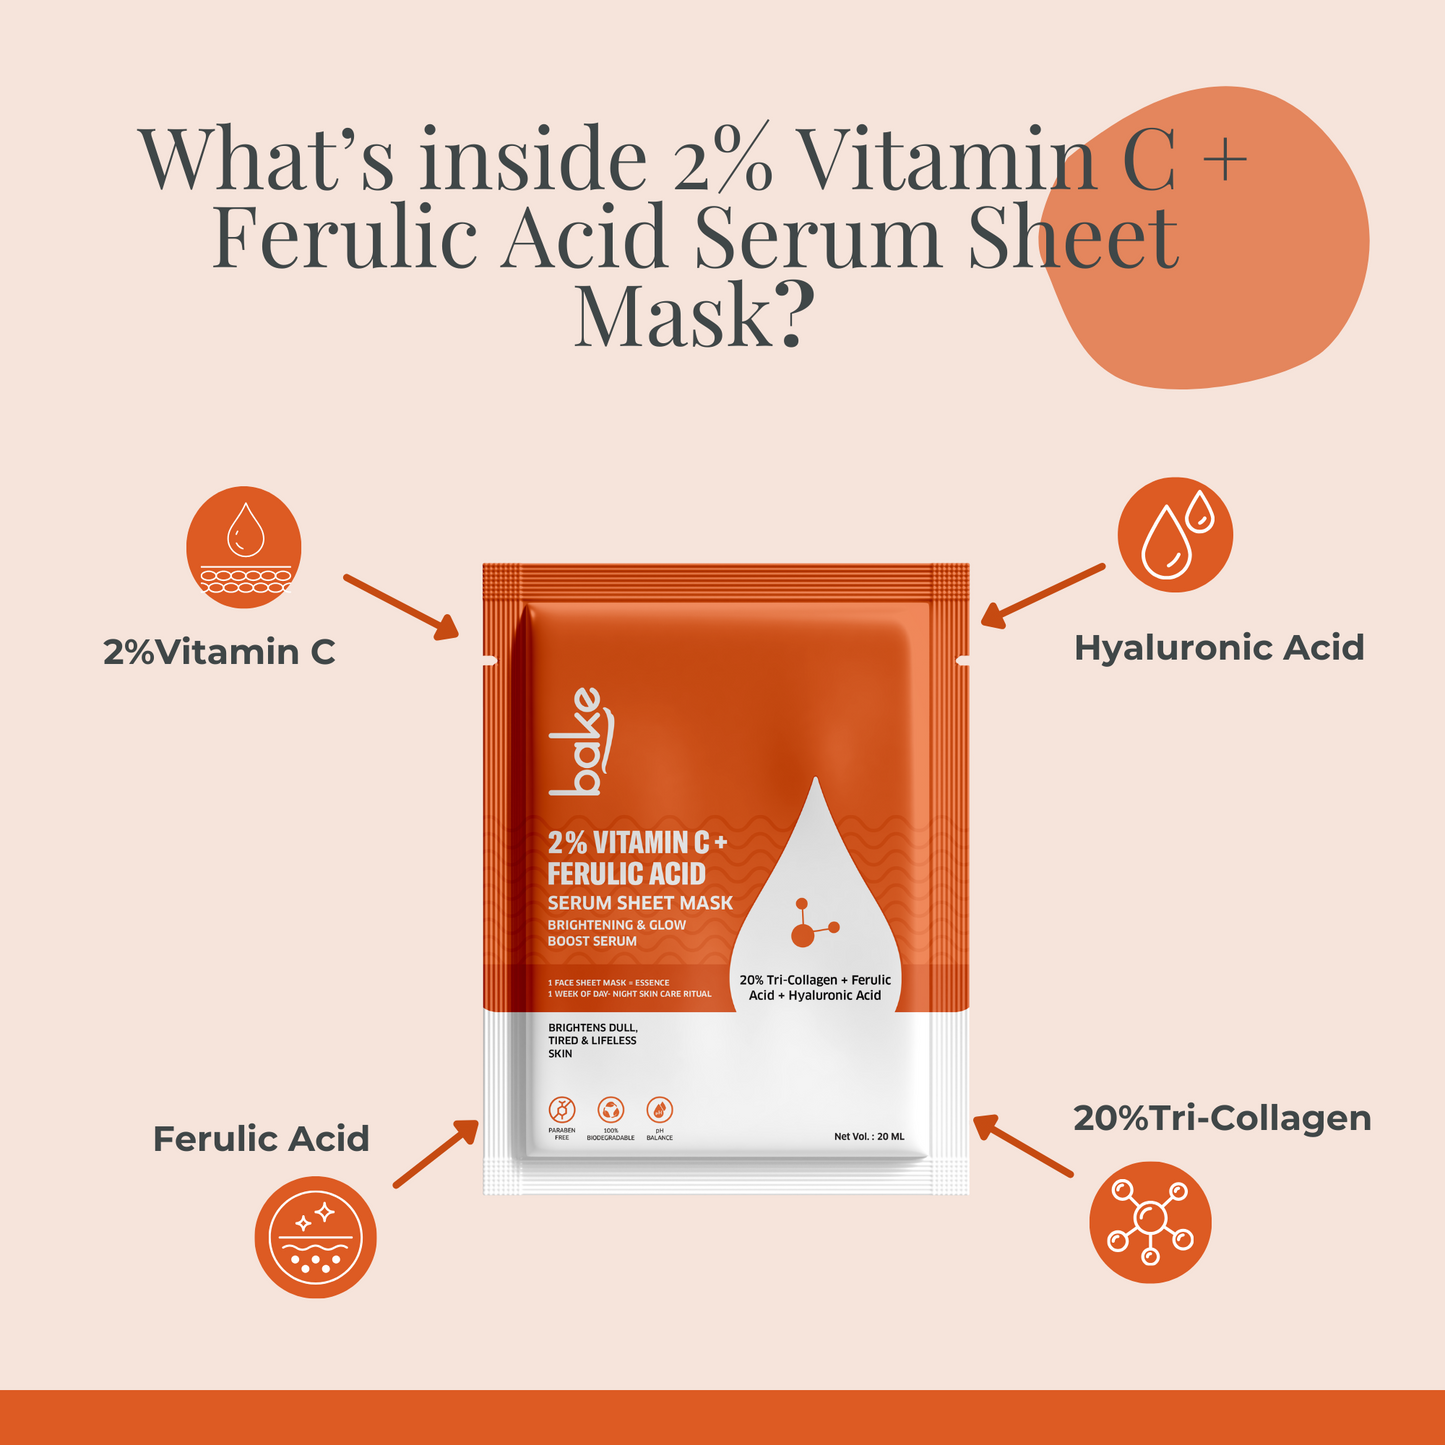 2% Vitamin C + Ferulic Acid Serum Sheet Mask